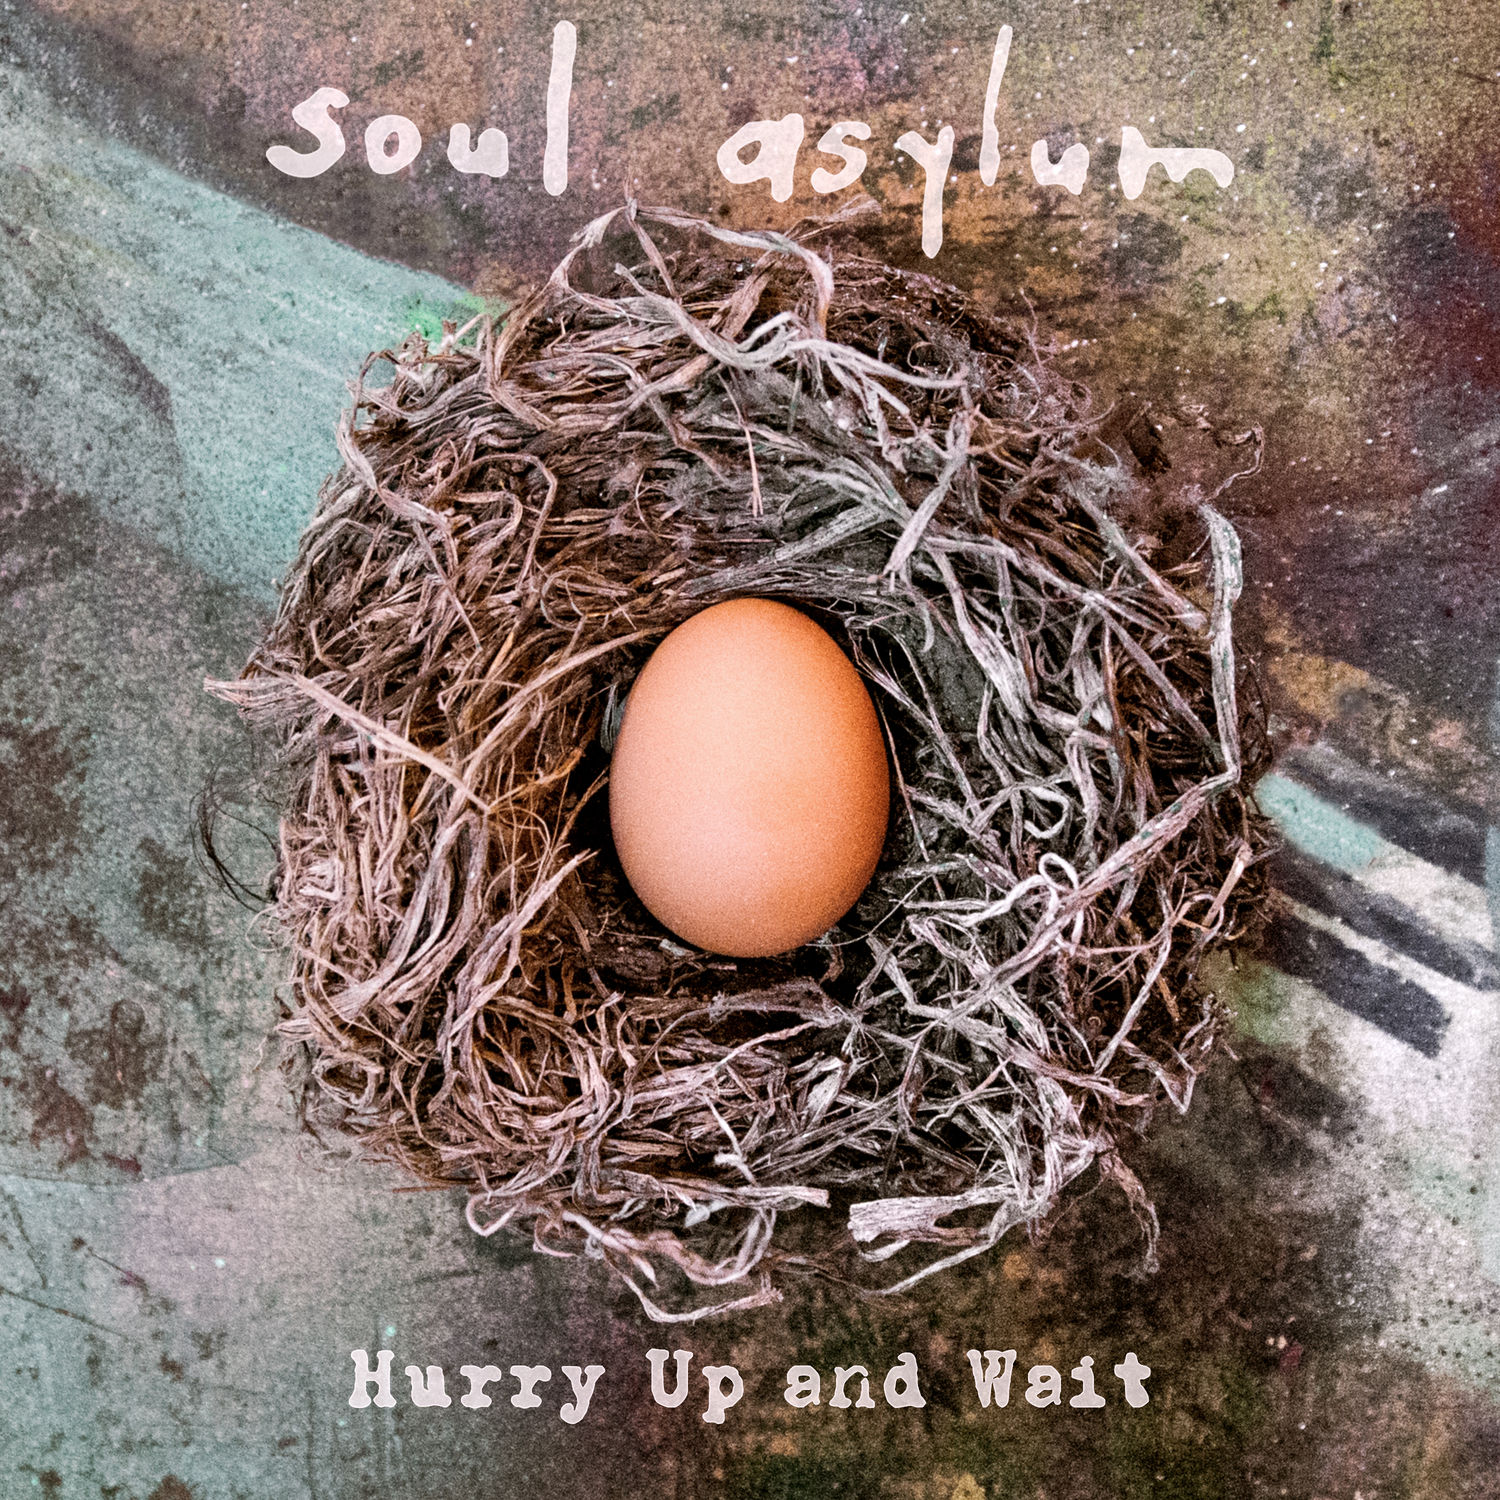 Soul Asylum - Hurry Up and Wait (2020) [FLAC 24bit/96kHz]